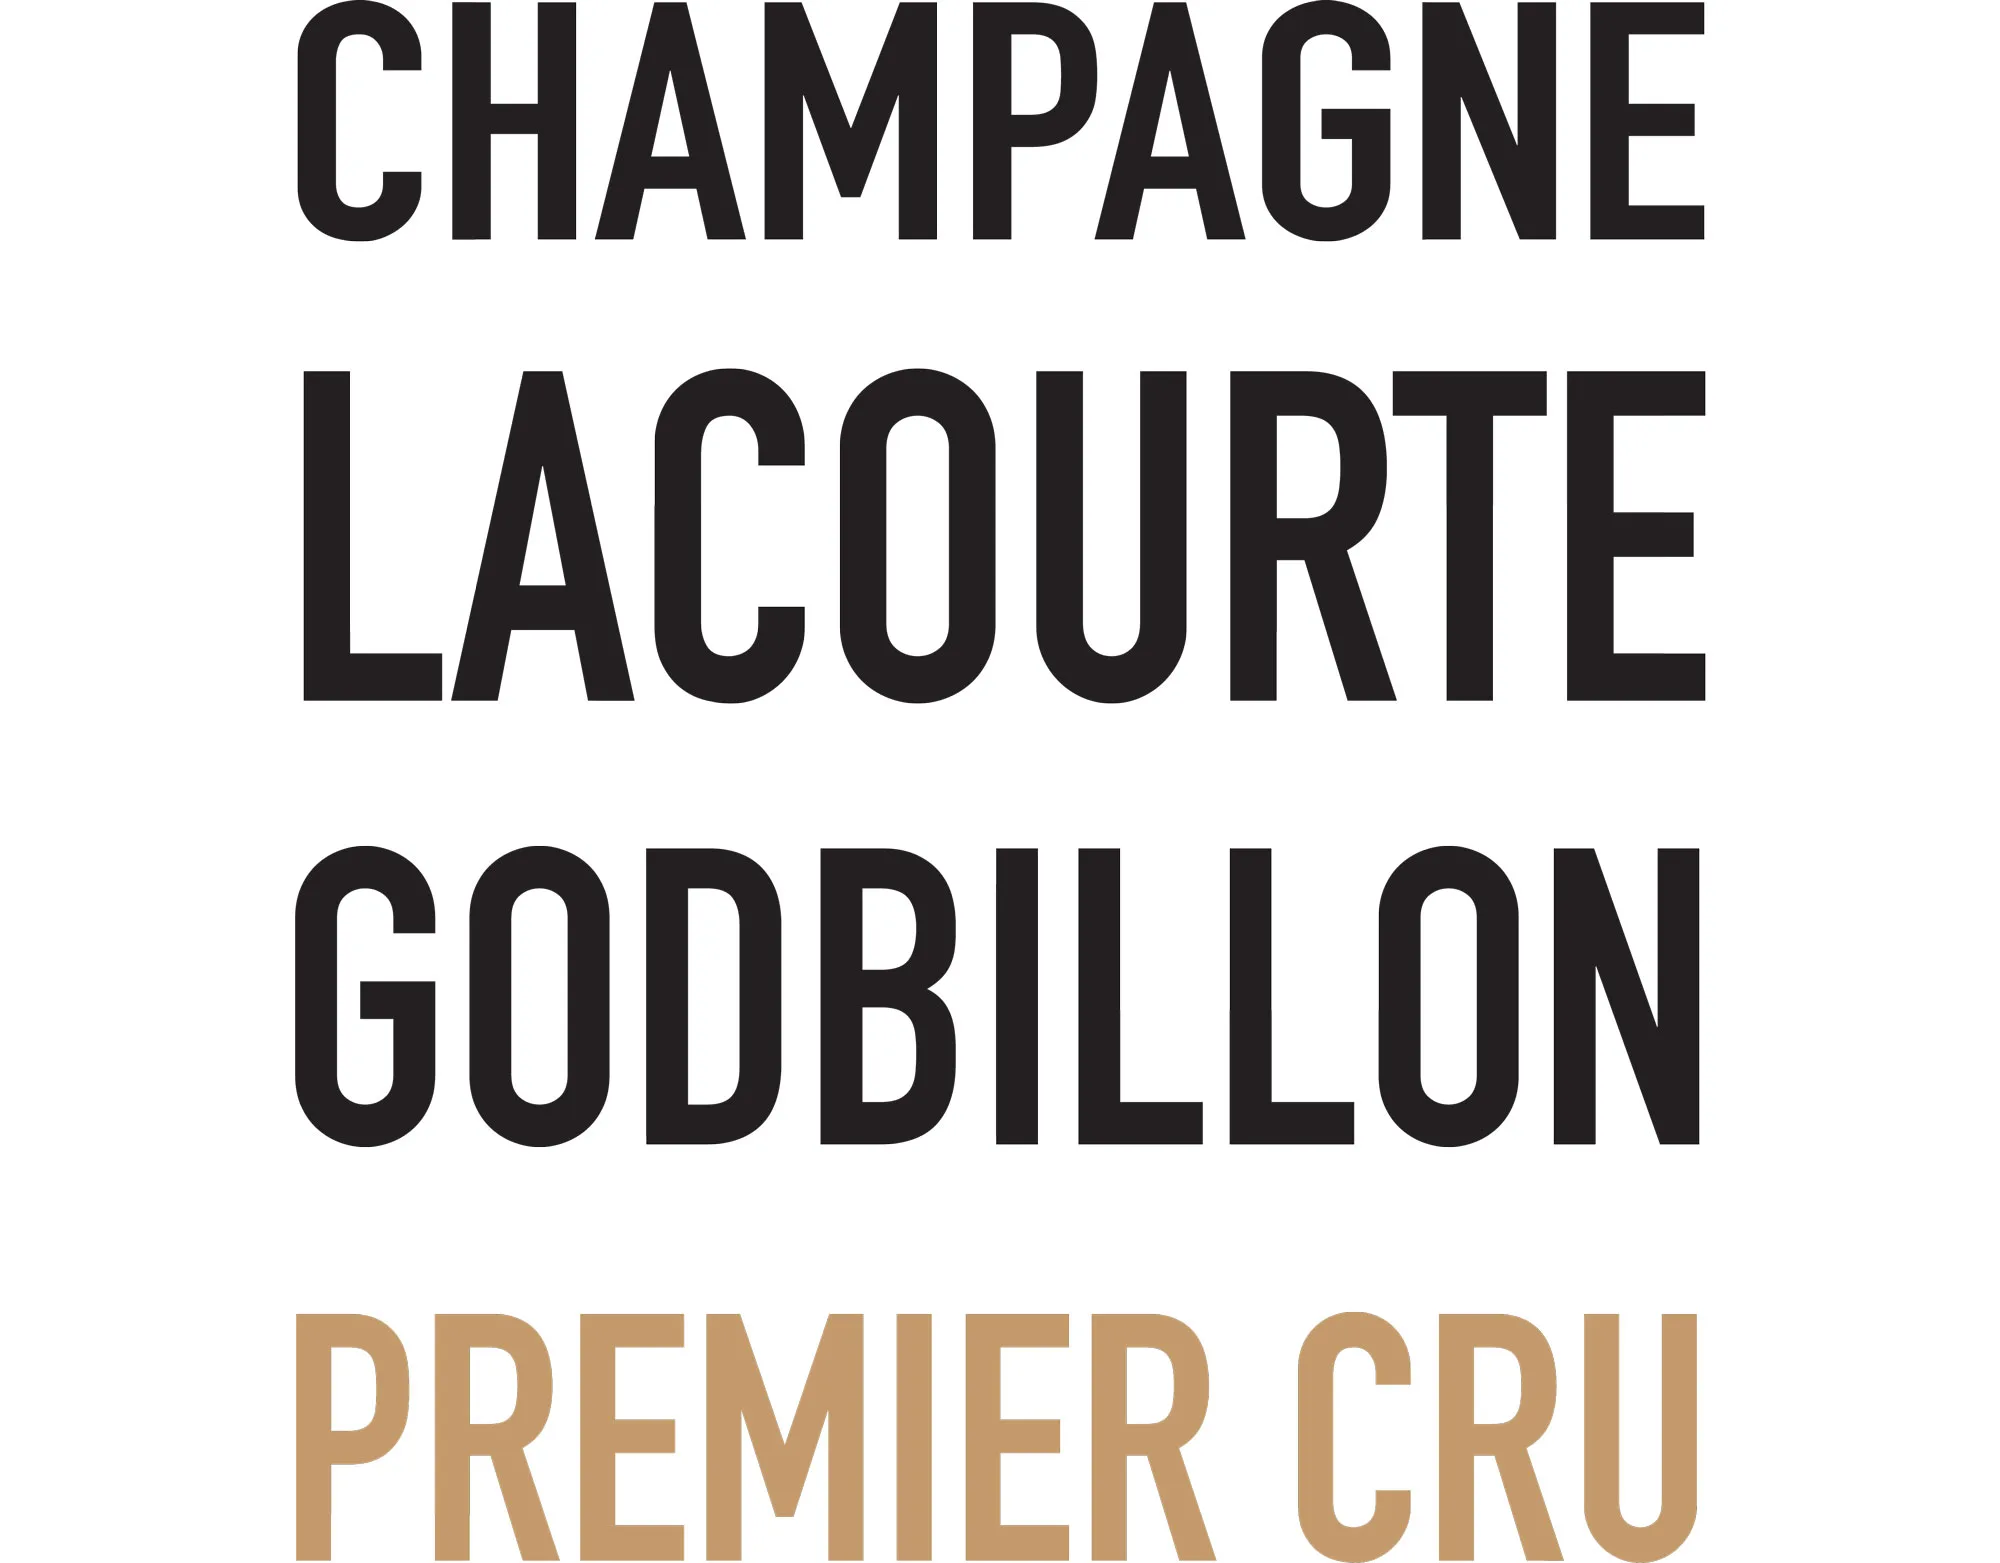 Champagne Lacourte-Godbillon